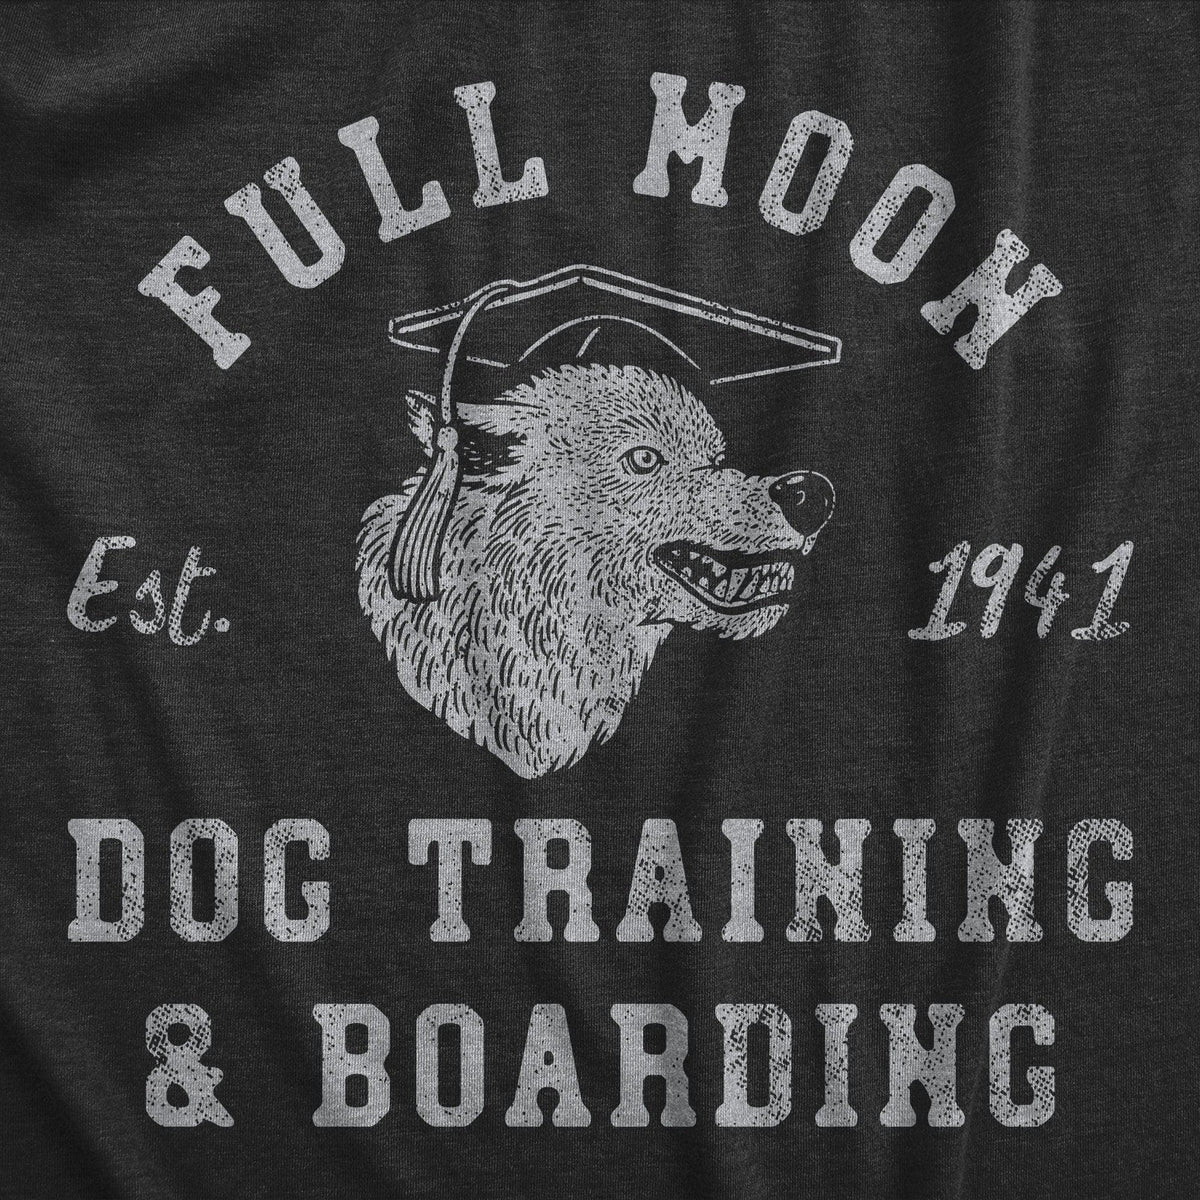 Full Moon Dog Training And Boarding Men&#39;s Tshirt  -  Crazy Dog T-Shirts